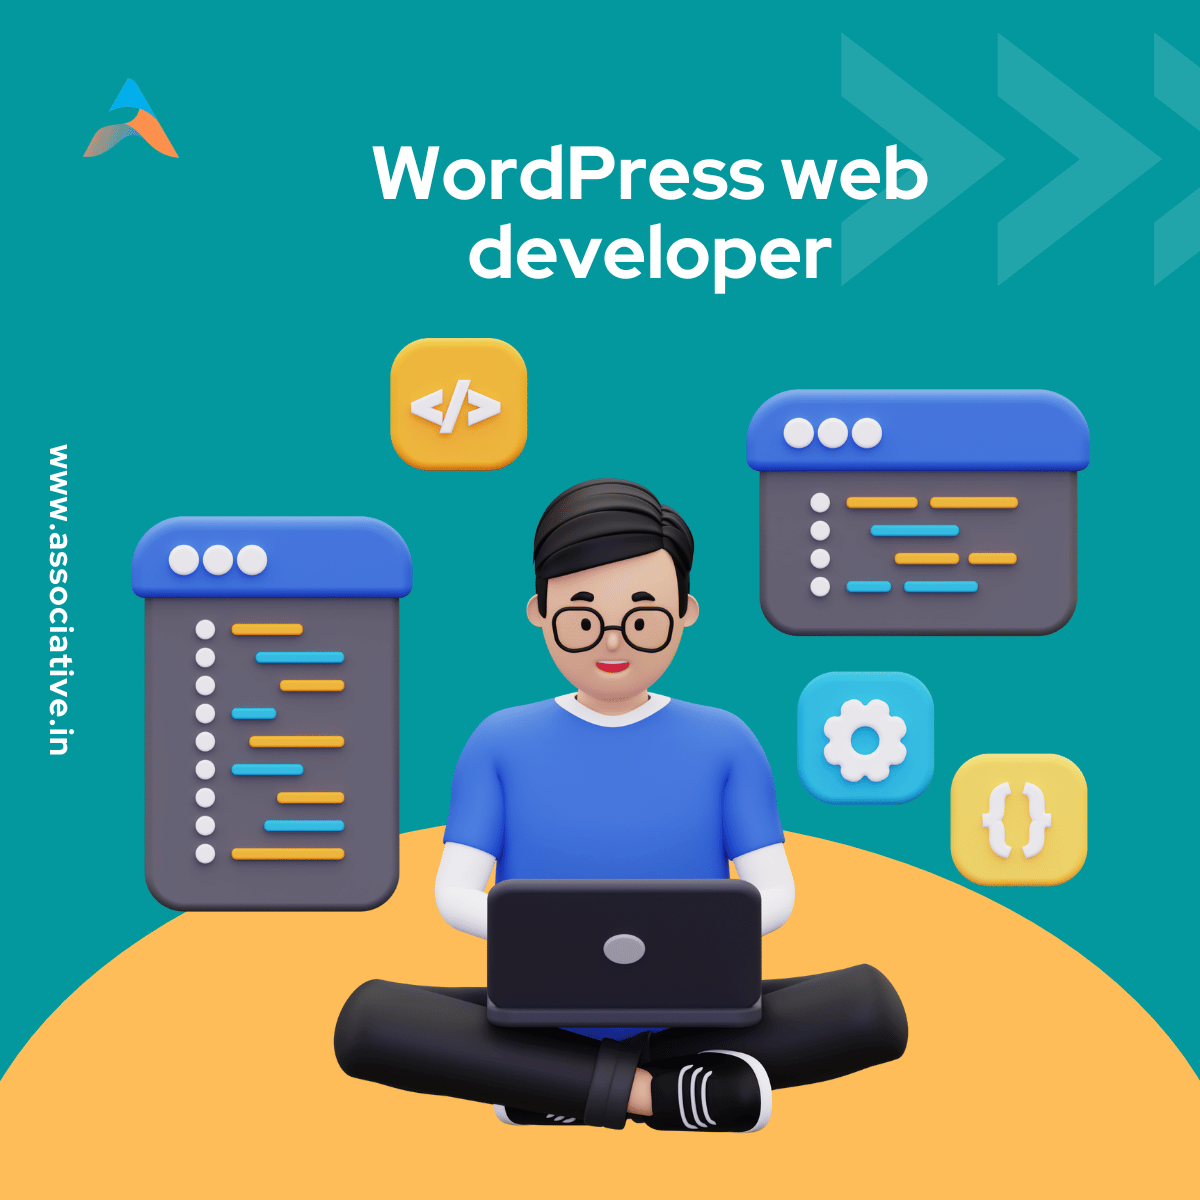 WordPress web developer